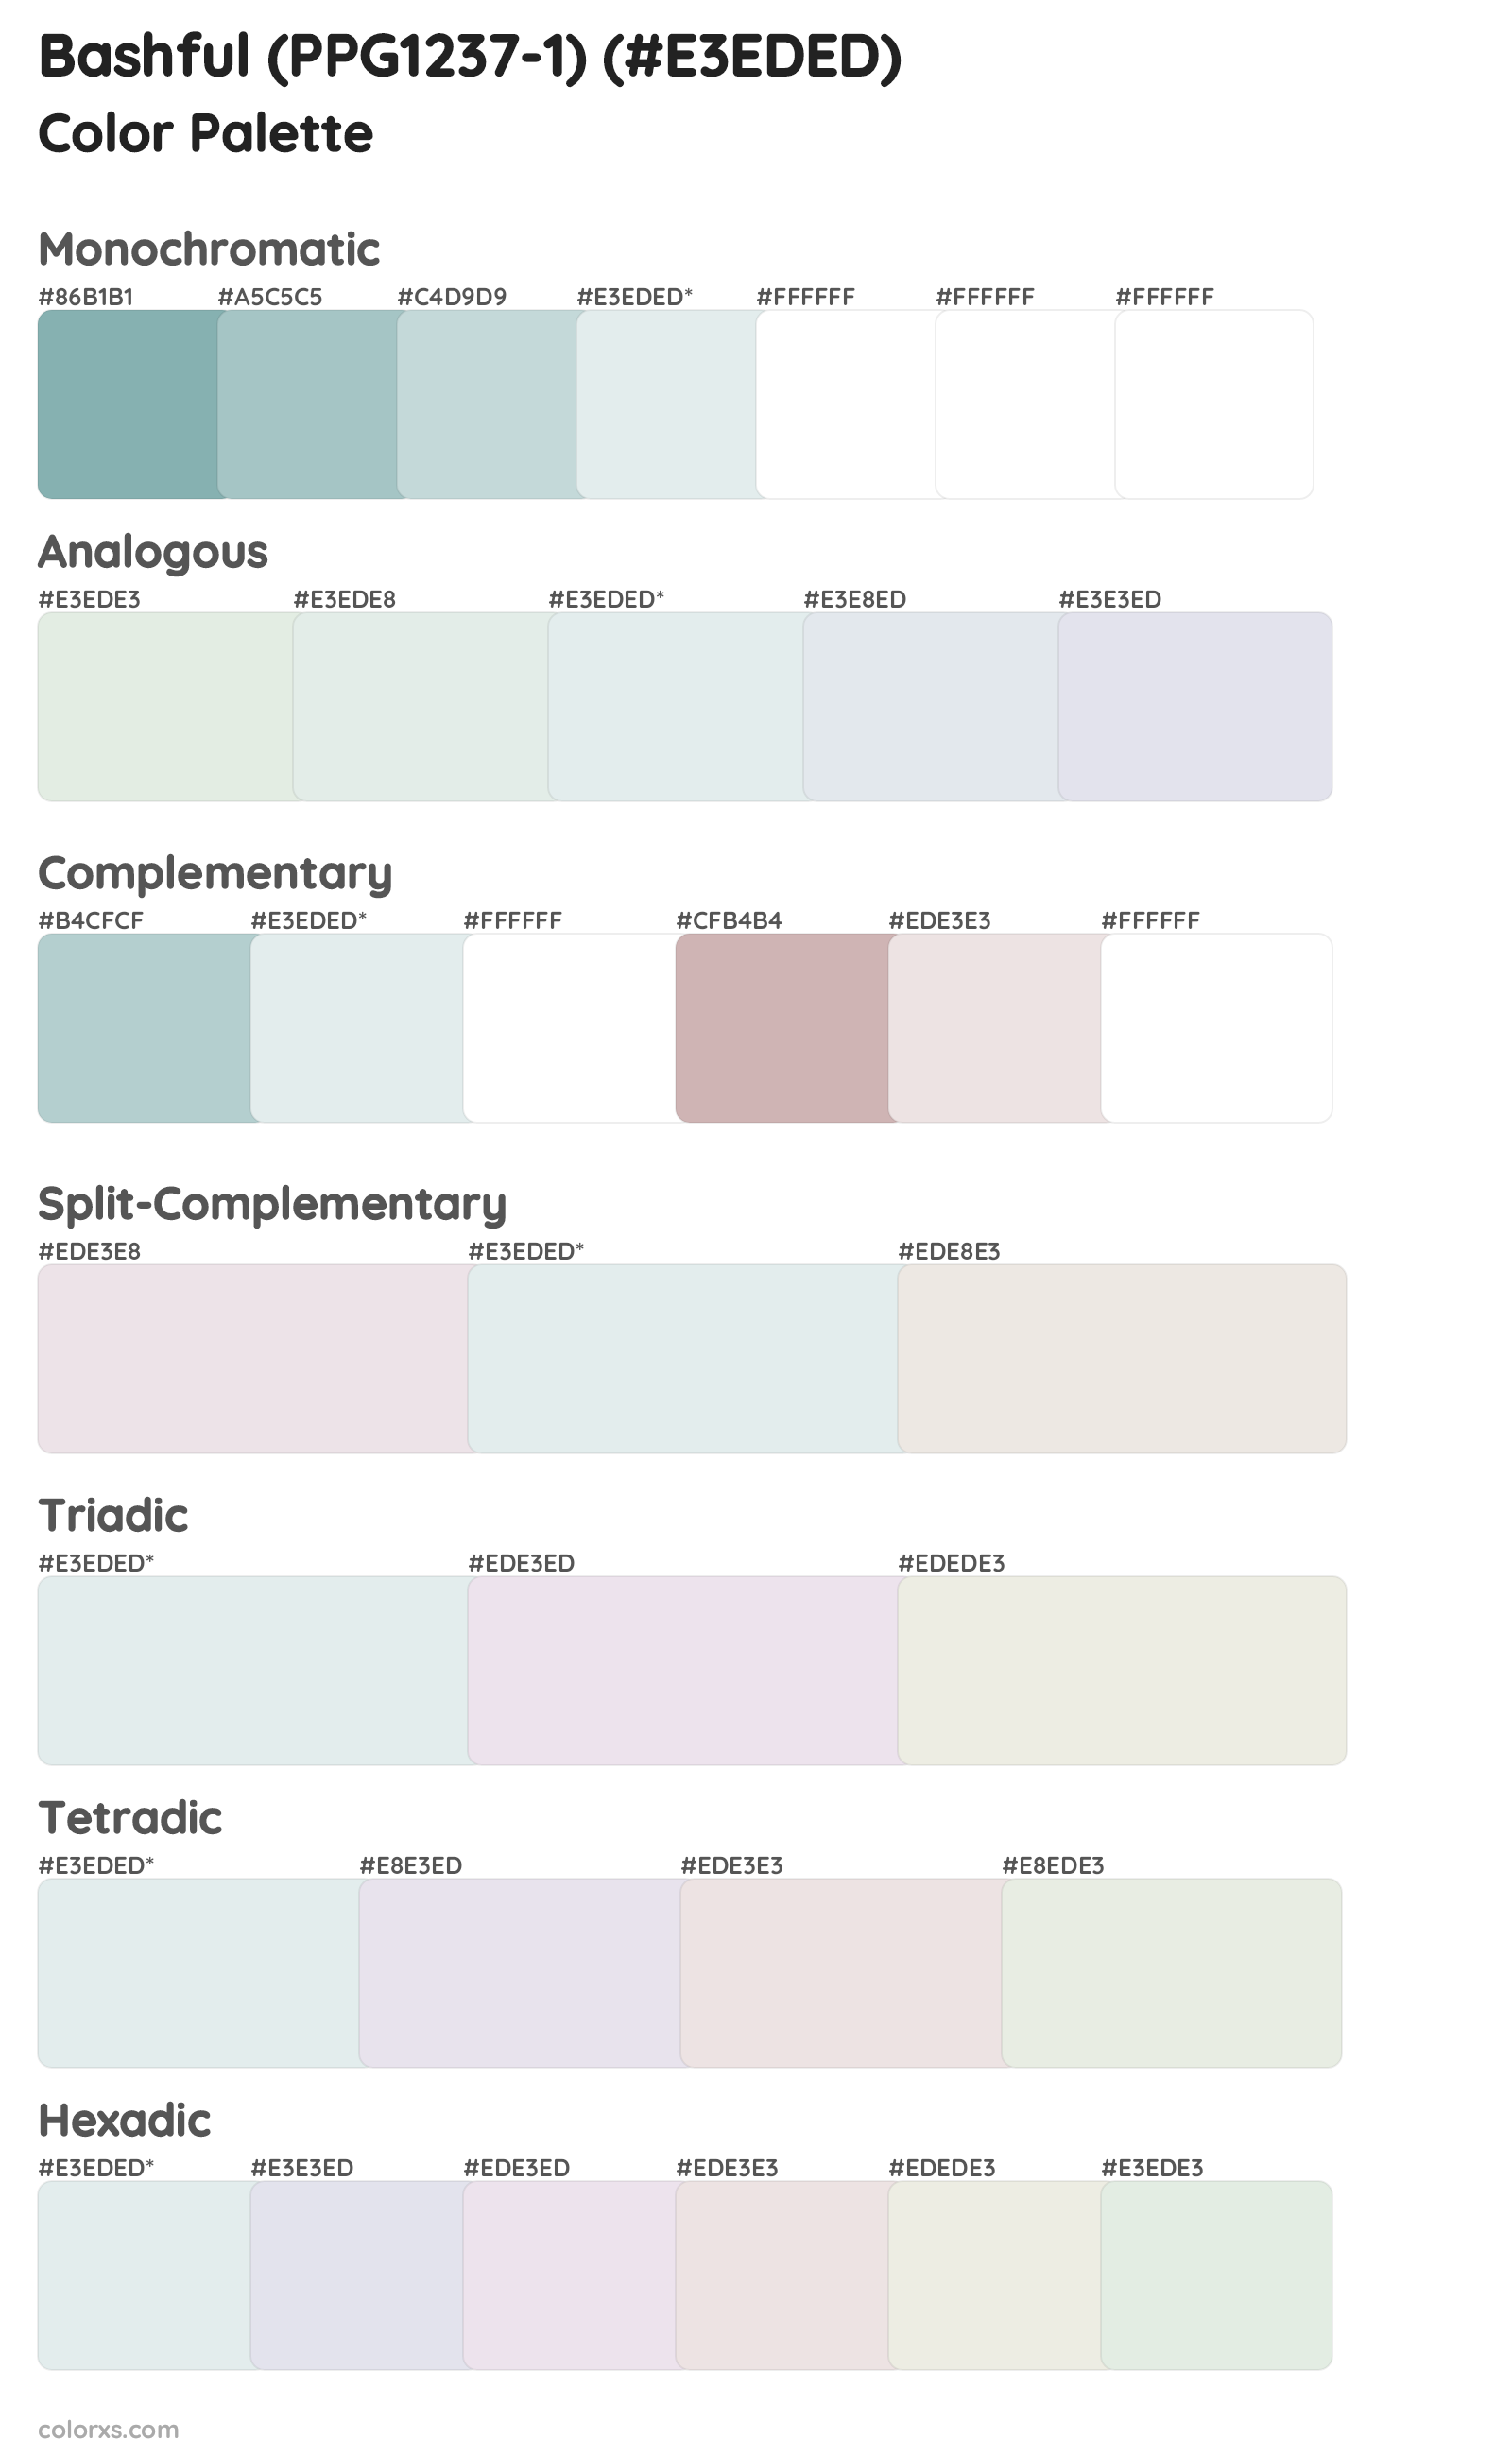 Bashful (PPG1237-1) Color Scheme Palettes